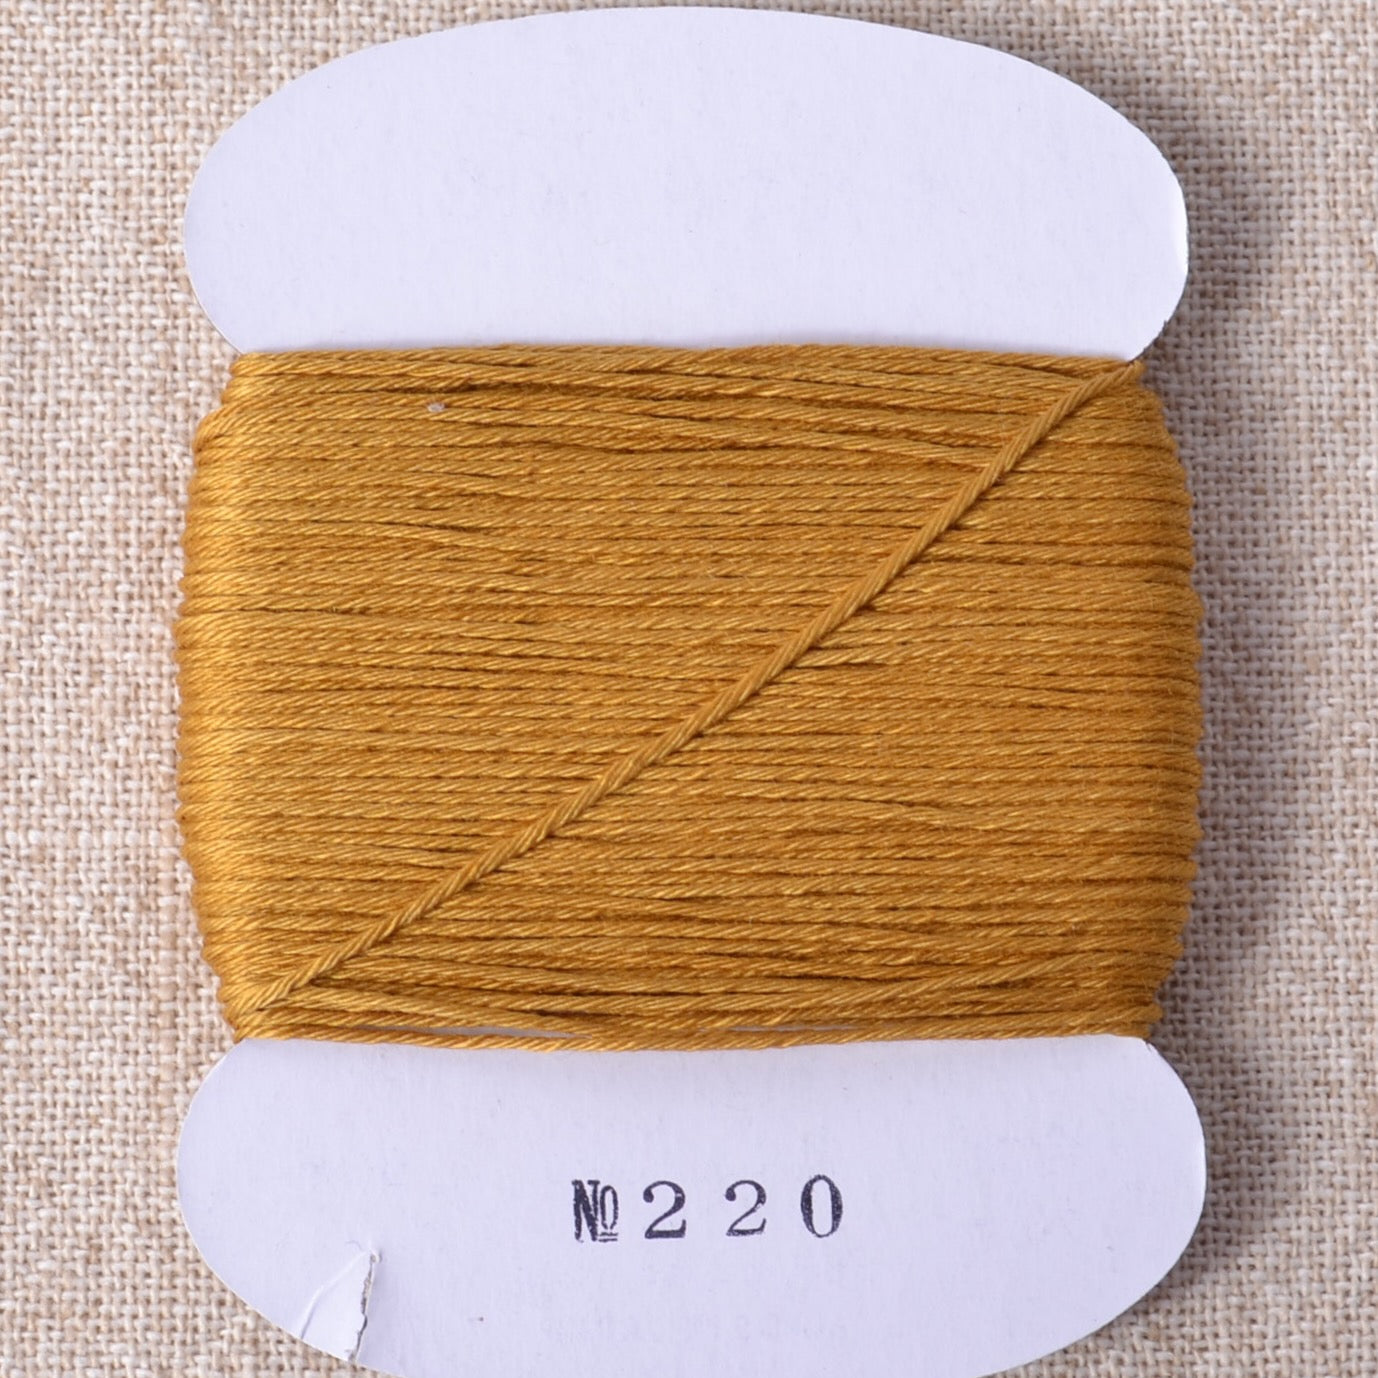 Shuanshuo Sewing Machine thread, Hand stiching ,Sew thread ,Pachwrok work  Cotton Thread ,DIY Sewing tools 10pcs/box 200M/Roll